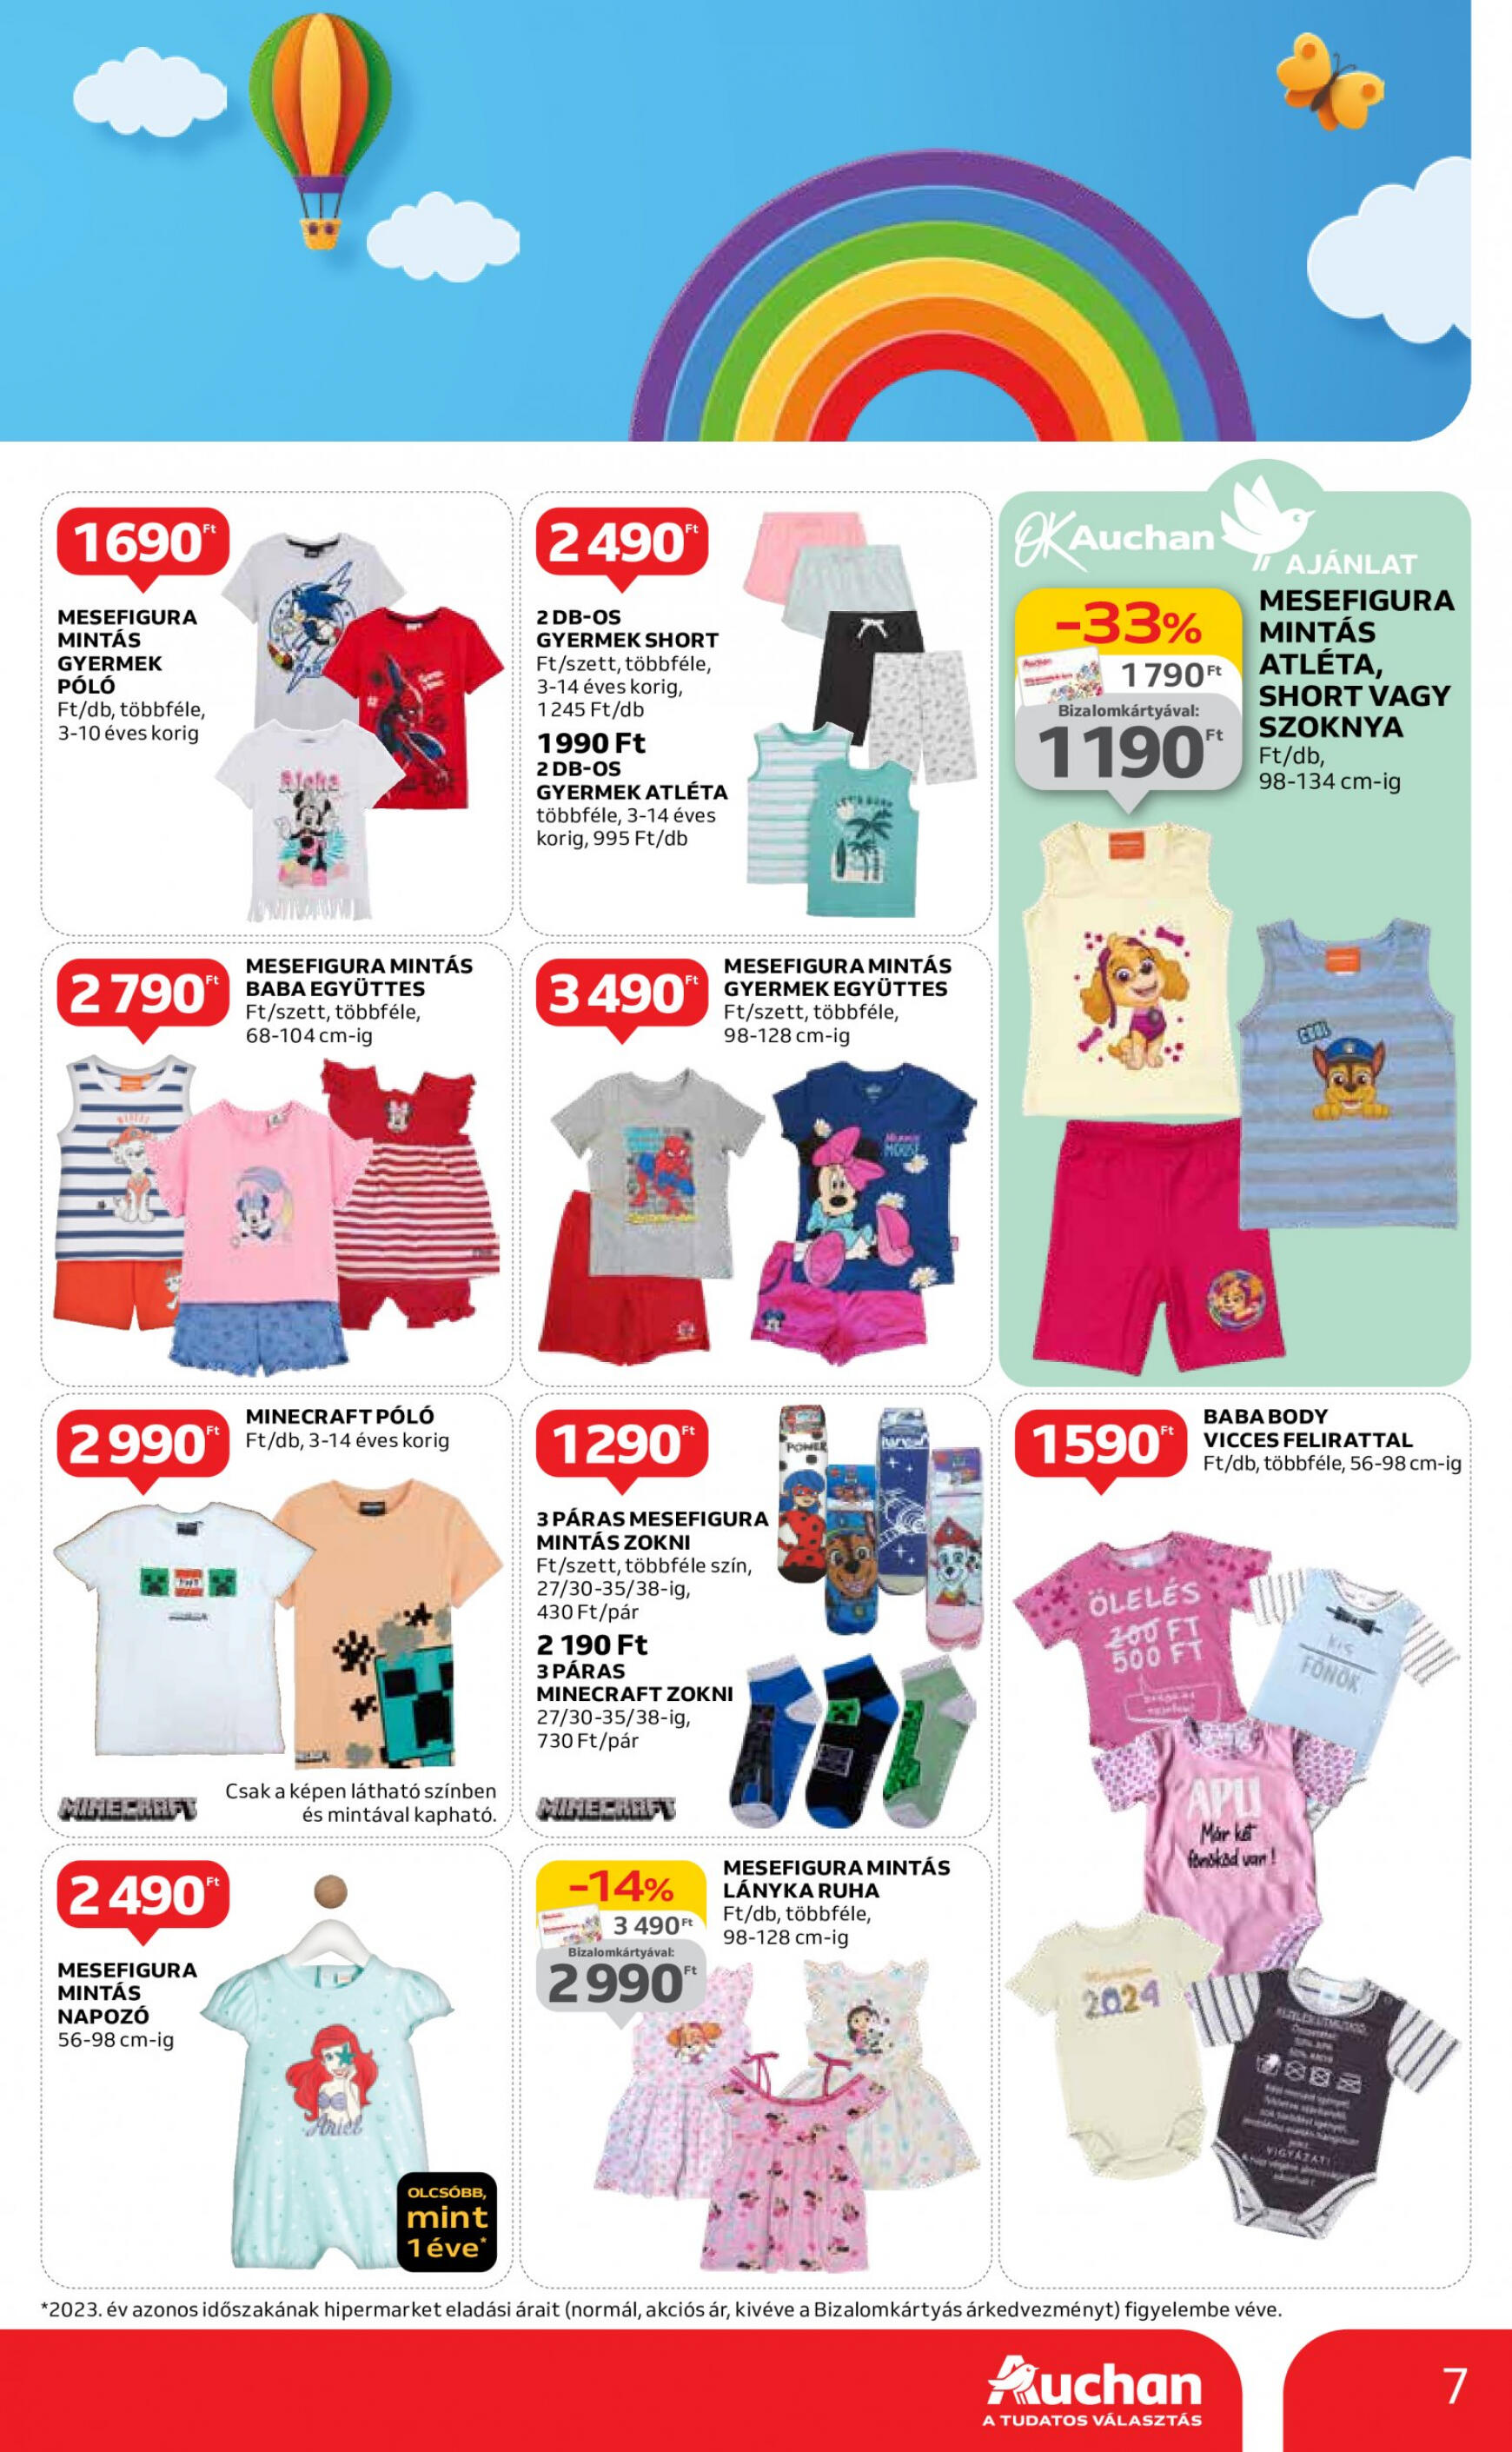 auchan - Aktuális újság Auchan 05.16. - 05.29. - page: 7